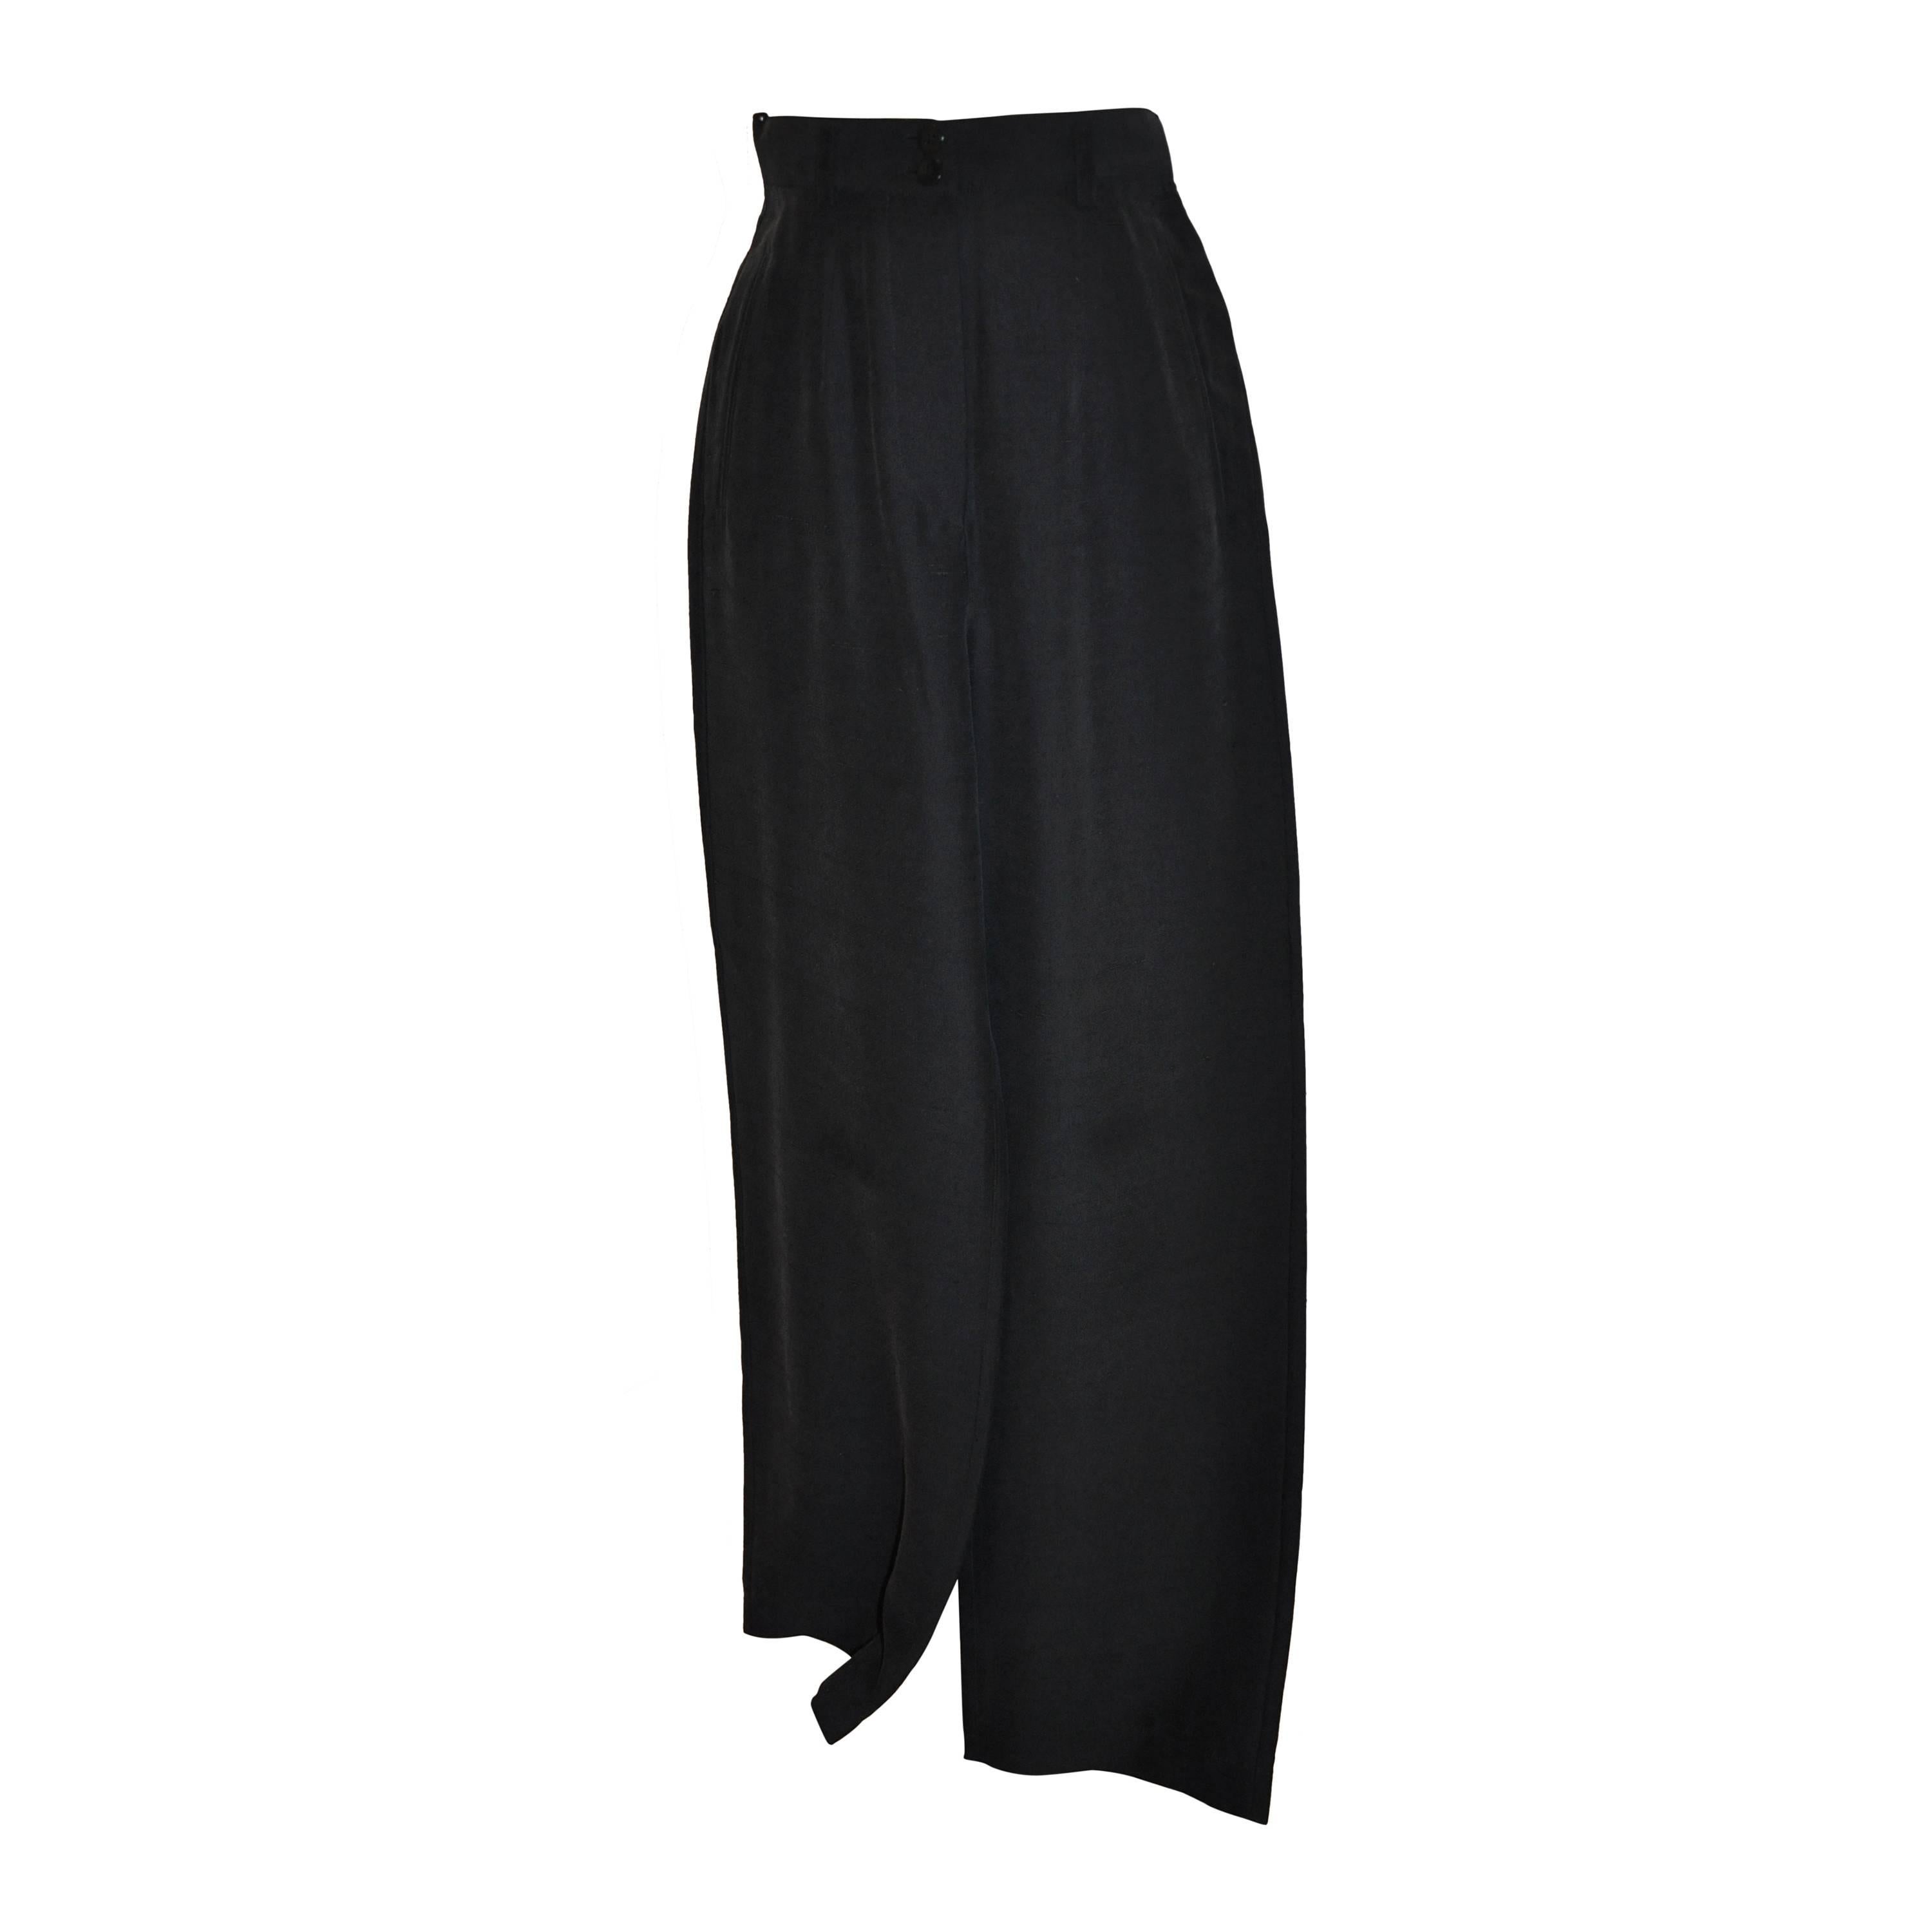 Georgio Armani "Boutique" Black Silk High-Waisted Trousers